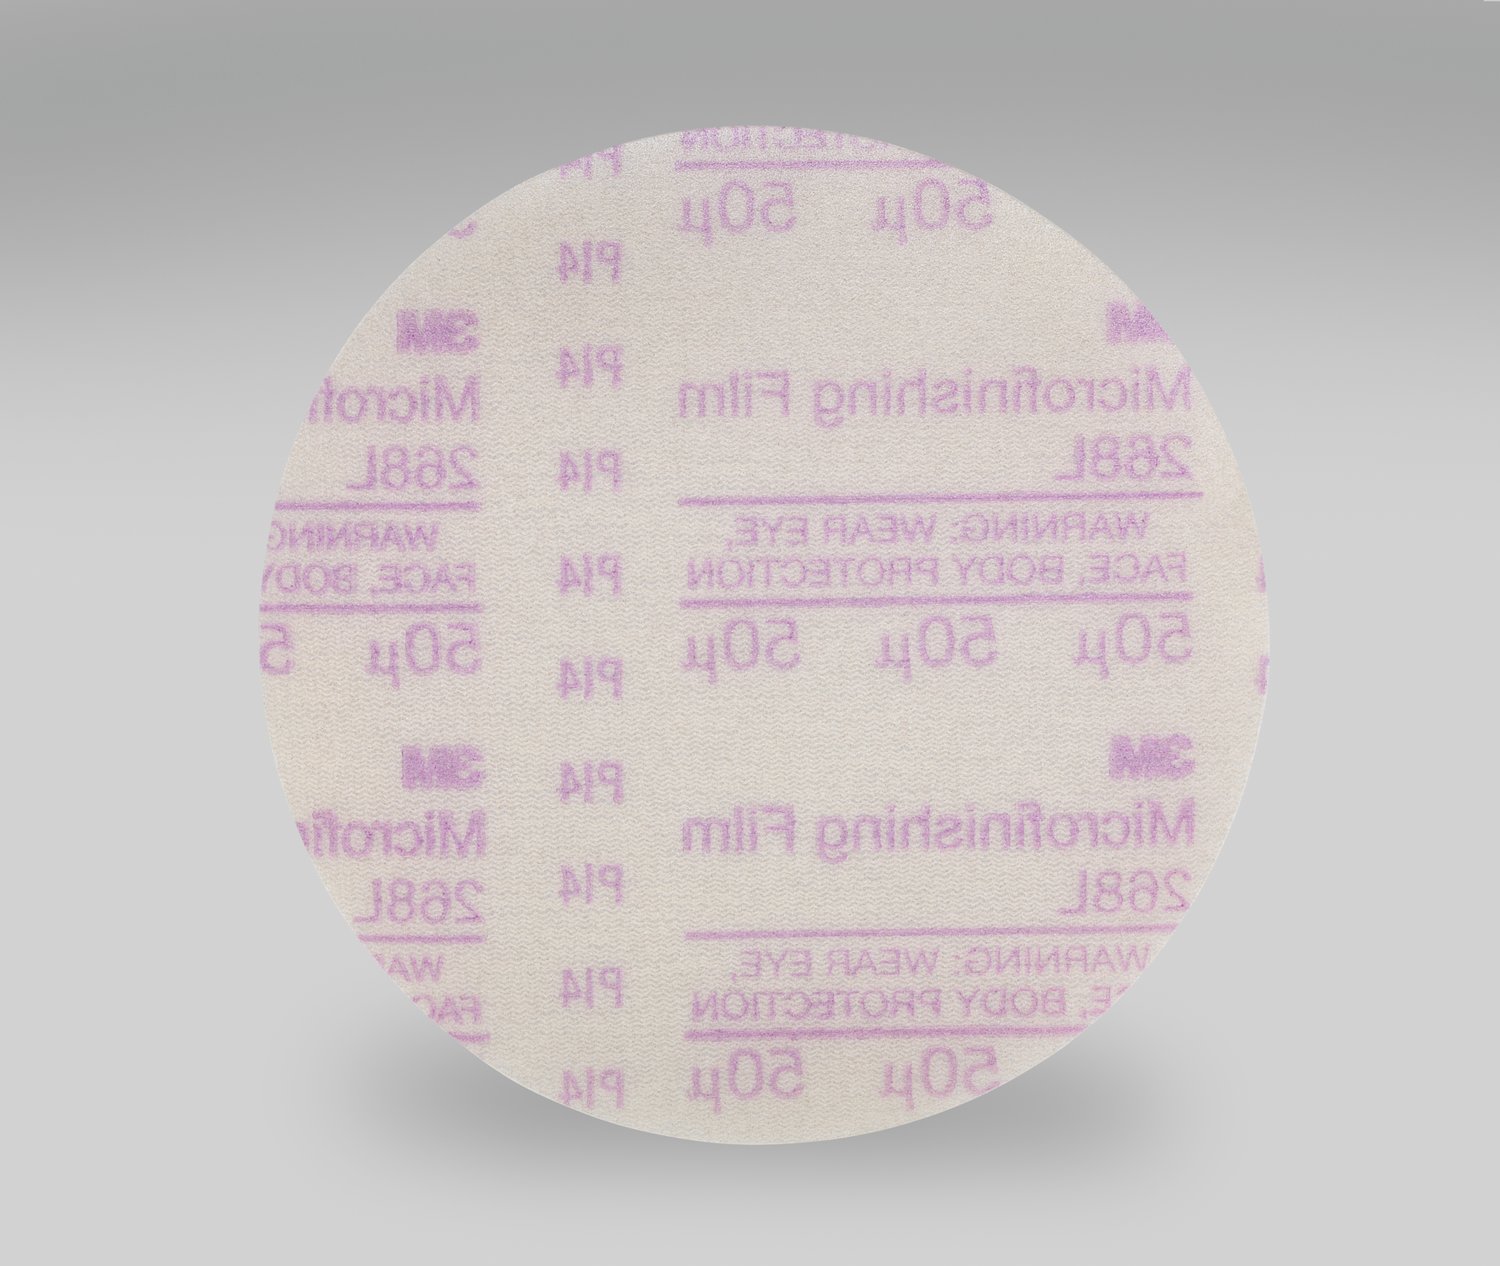 7100205966 - 3M Microfinishing Film Disc 268L, 8 in x NH, 50 Micron, Unbacksized,
Die 800L, 50/Bag, 200 ea/Case